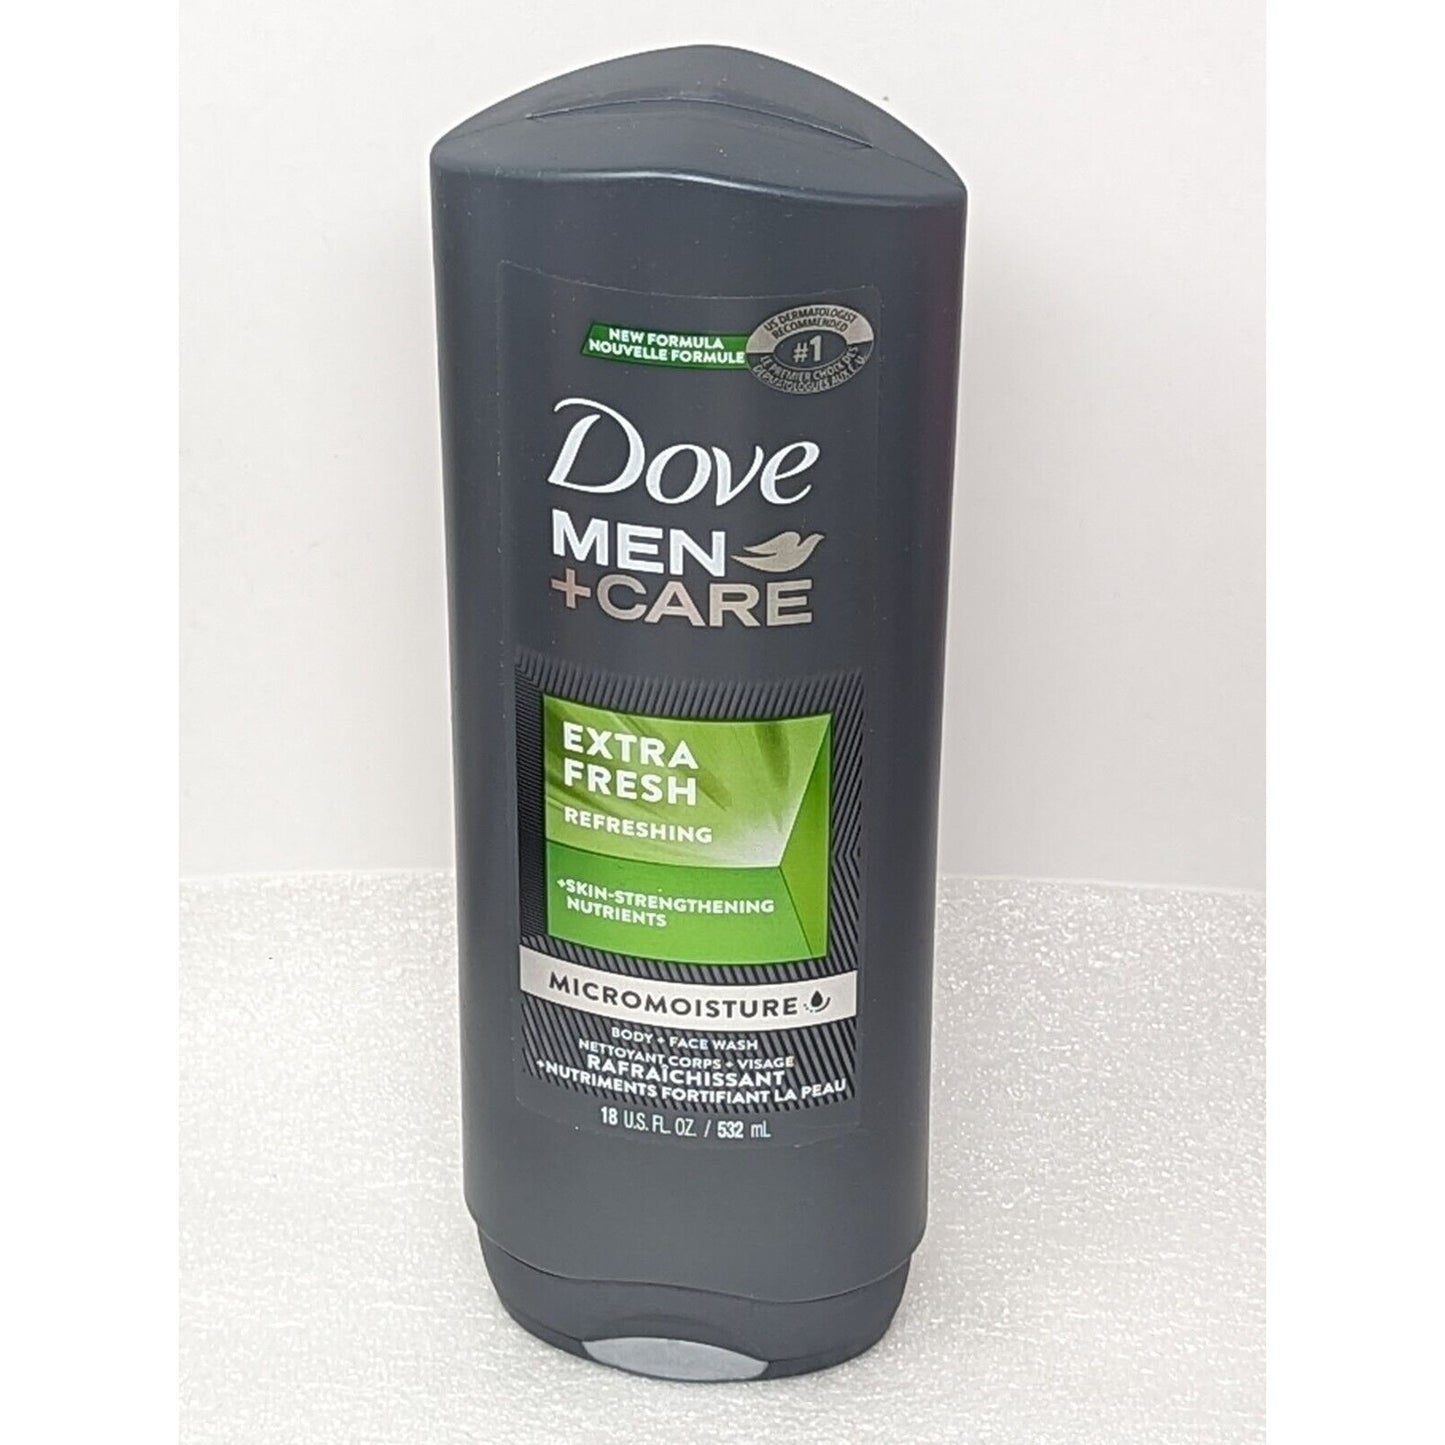 Dove Men + Care Extra Fresh Micro Moisture Refreshing Body Wash 18 oz